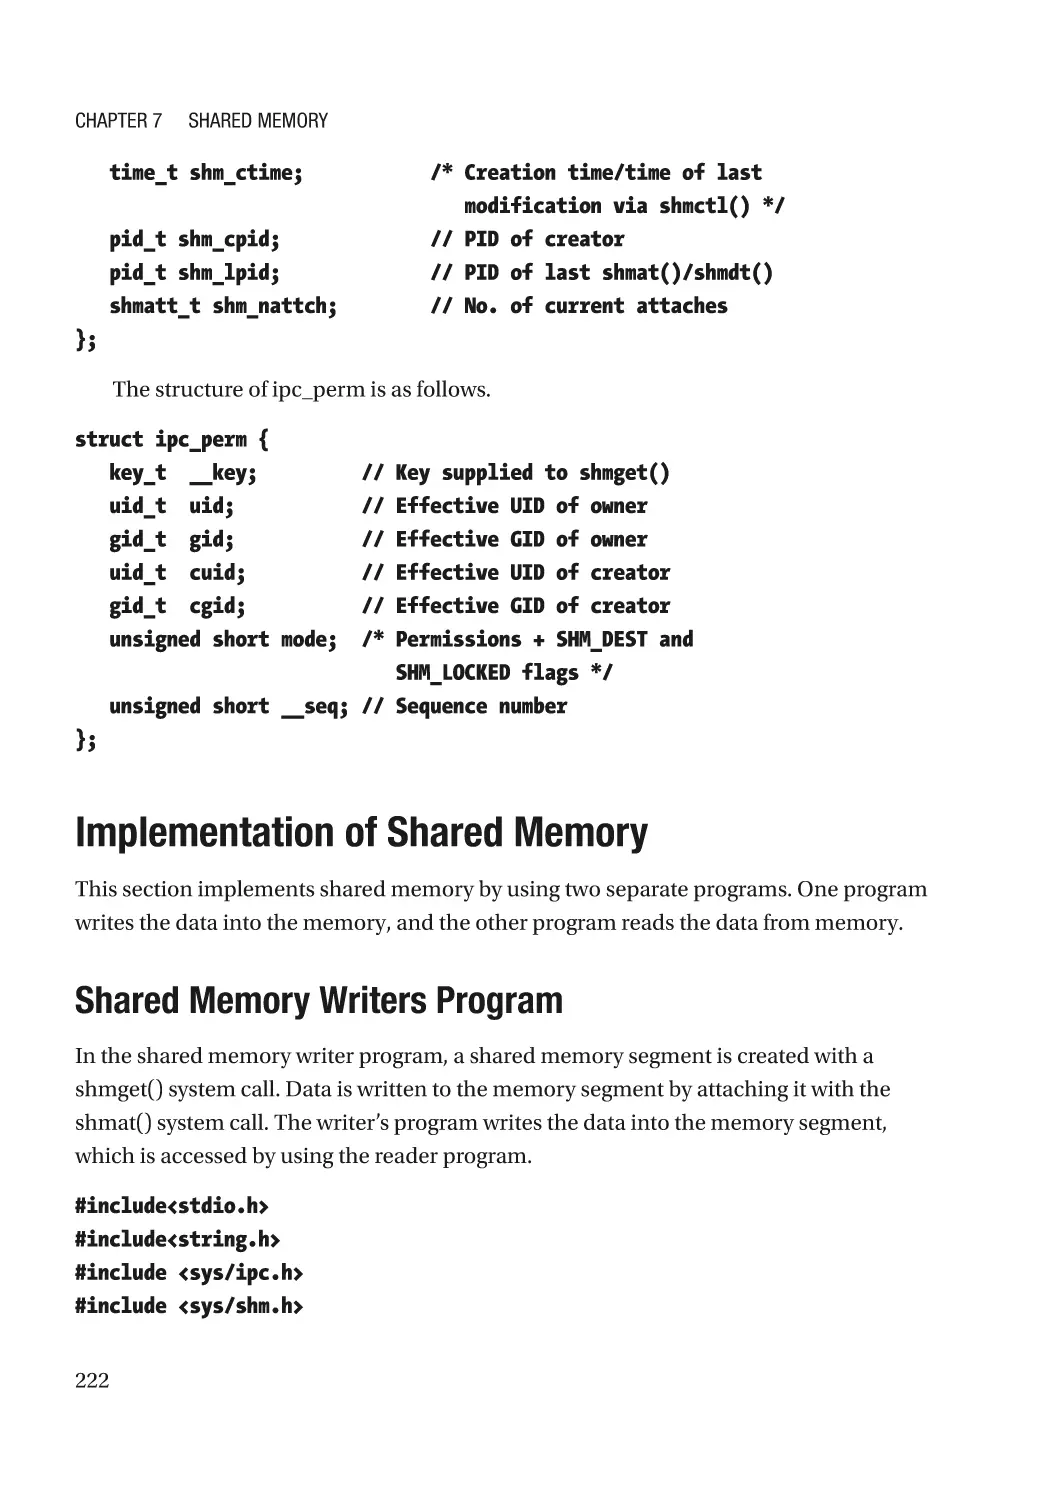 Implementation of Shared Memory
Shared Memory Writers Program